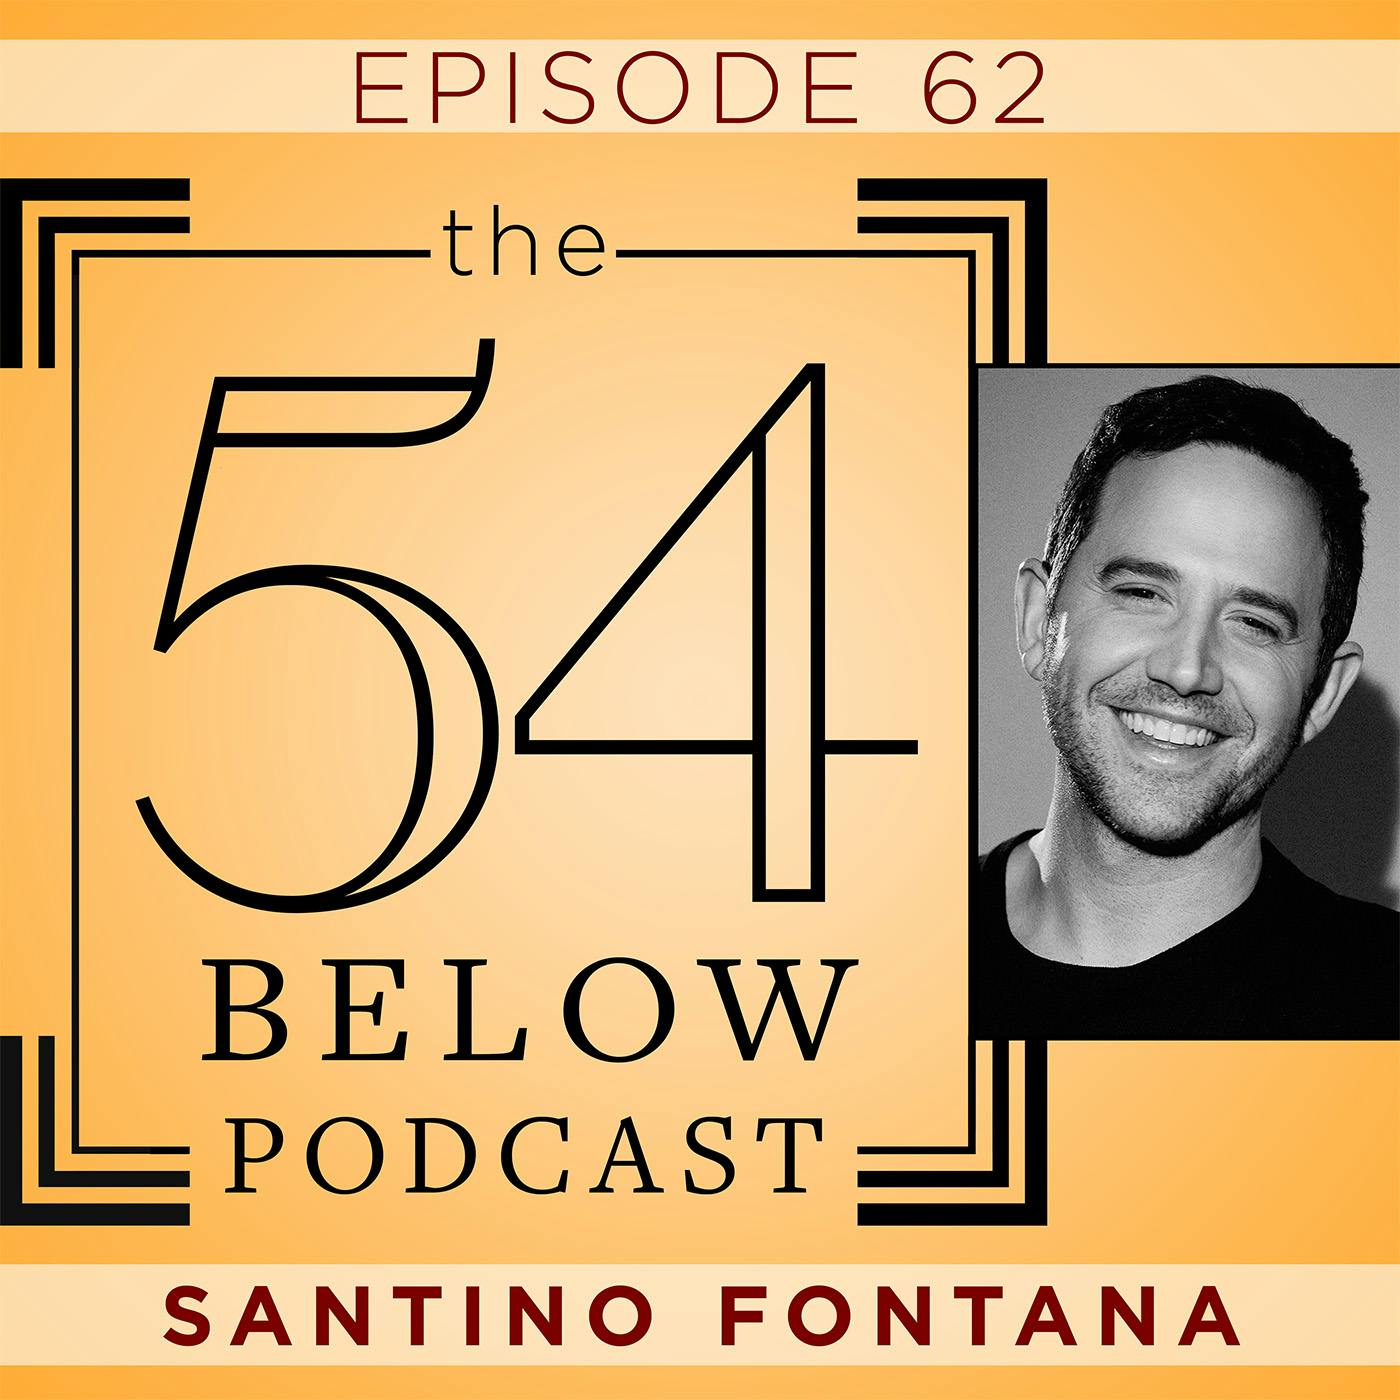 Episode 62: SANTINO FONTANA